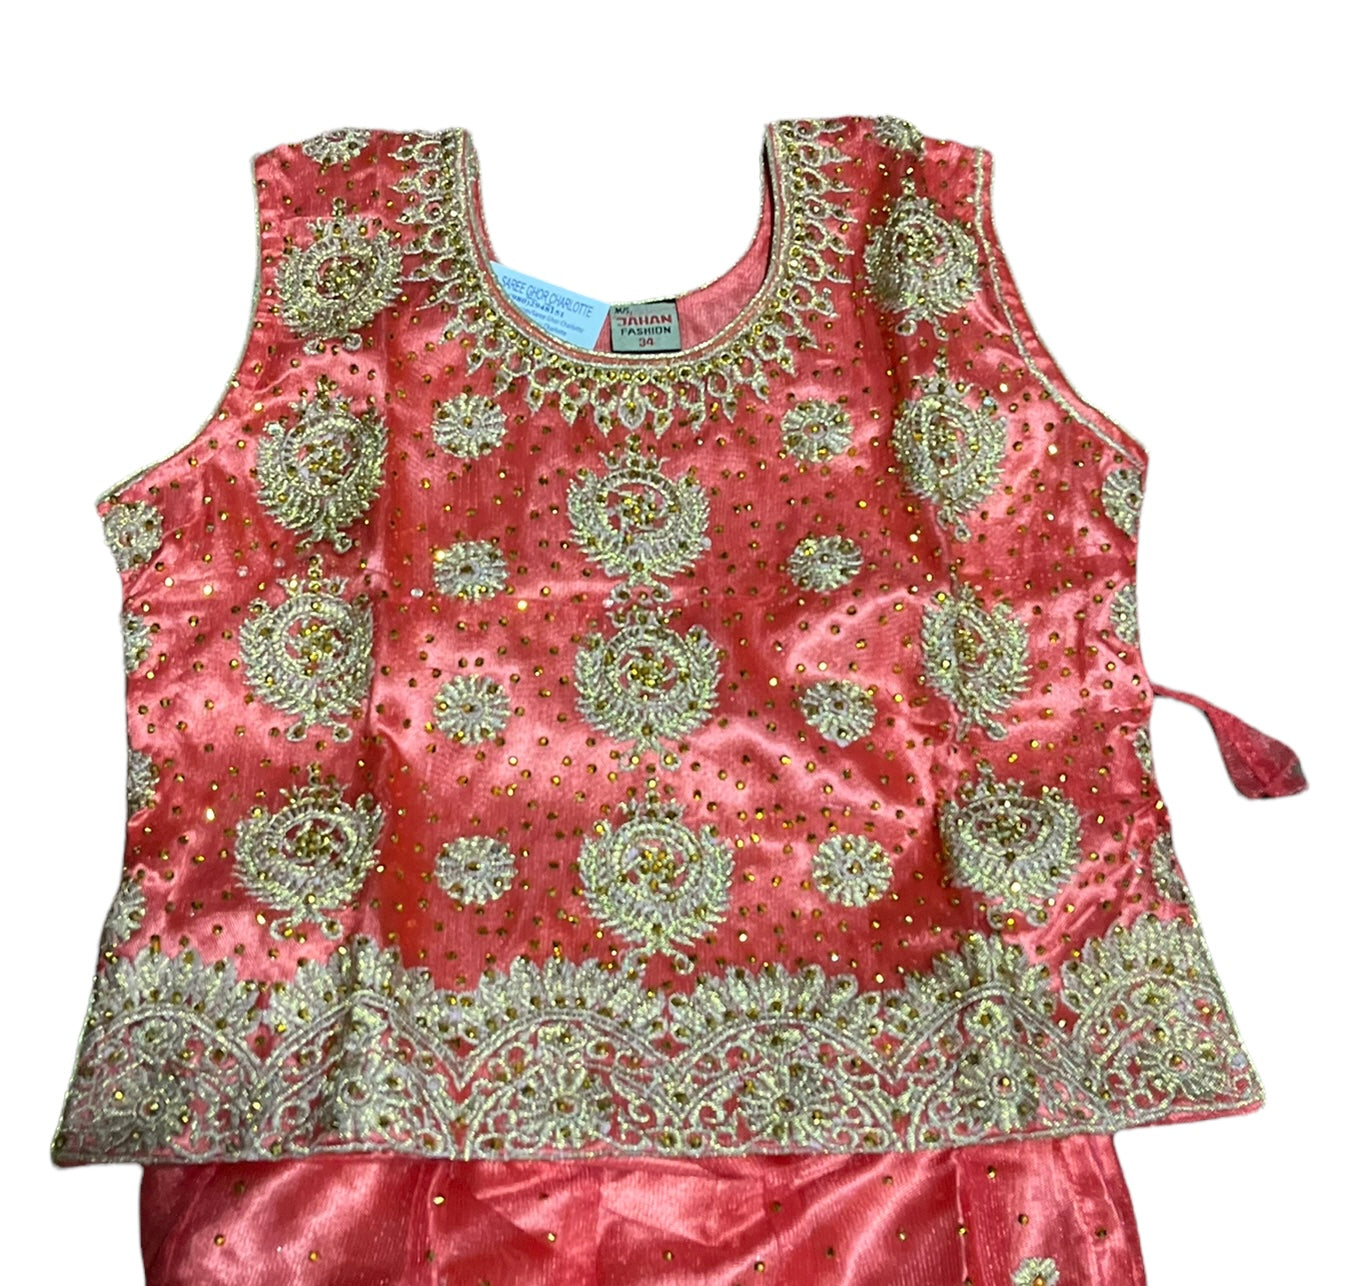 Princess Dreams: Girls' Embroidered Lehenga Choli Set